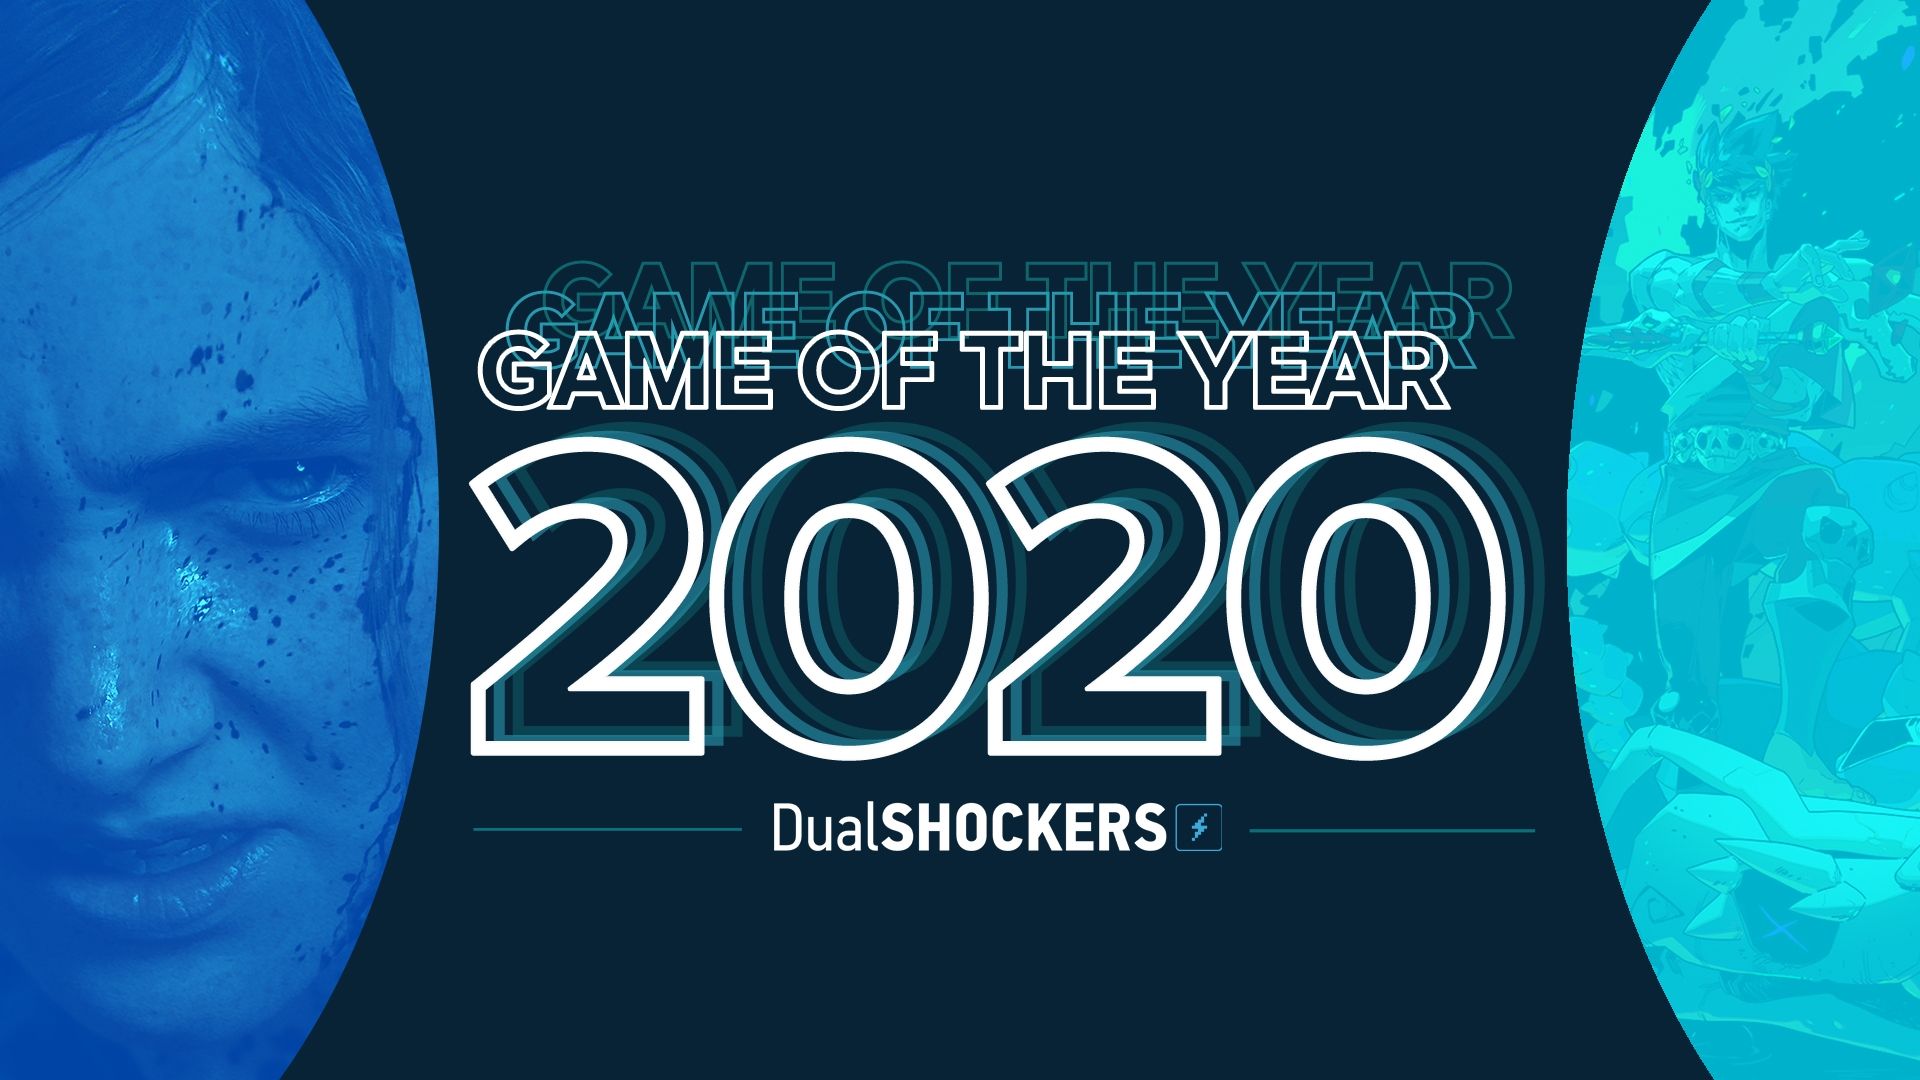 www.dualshockers.com